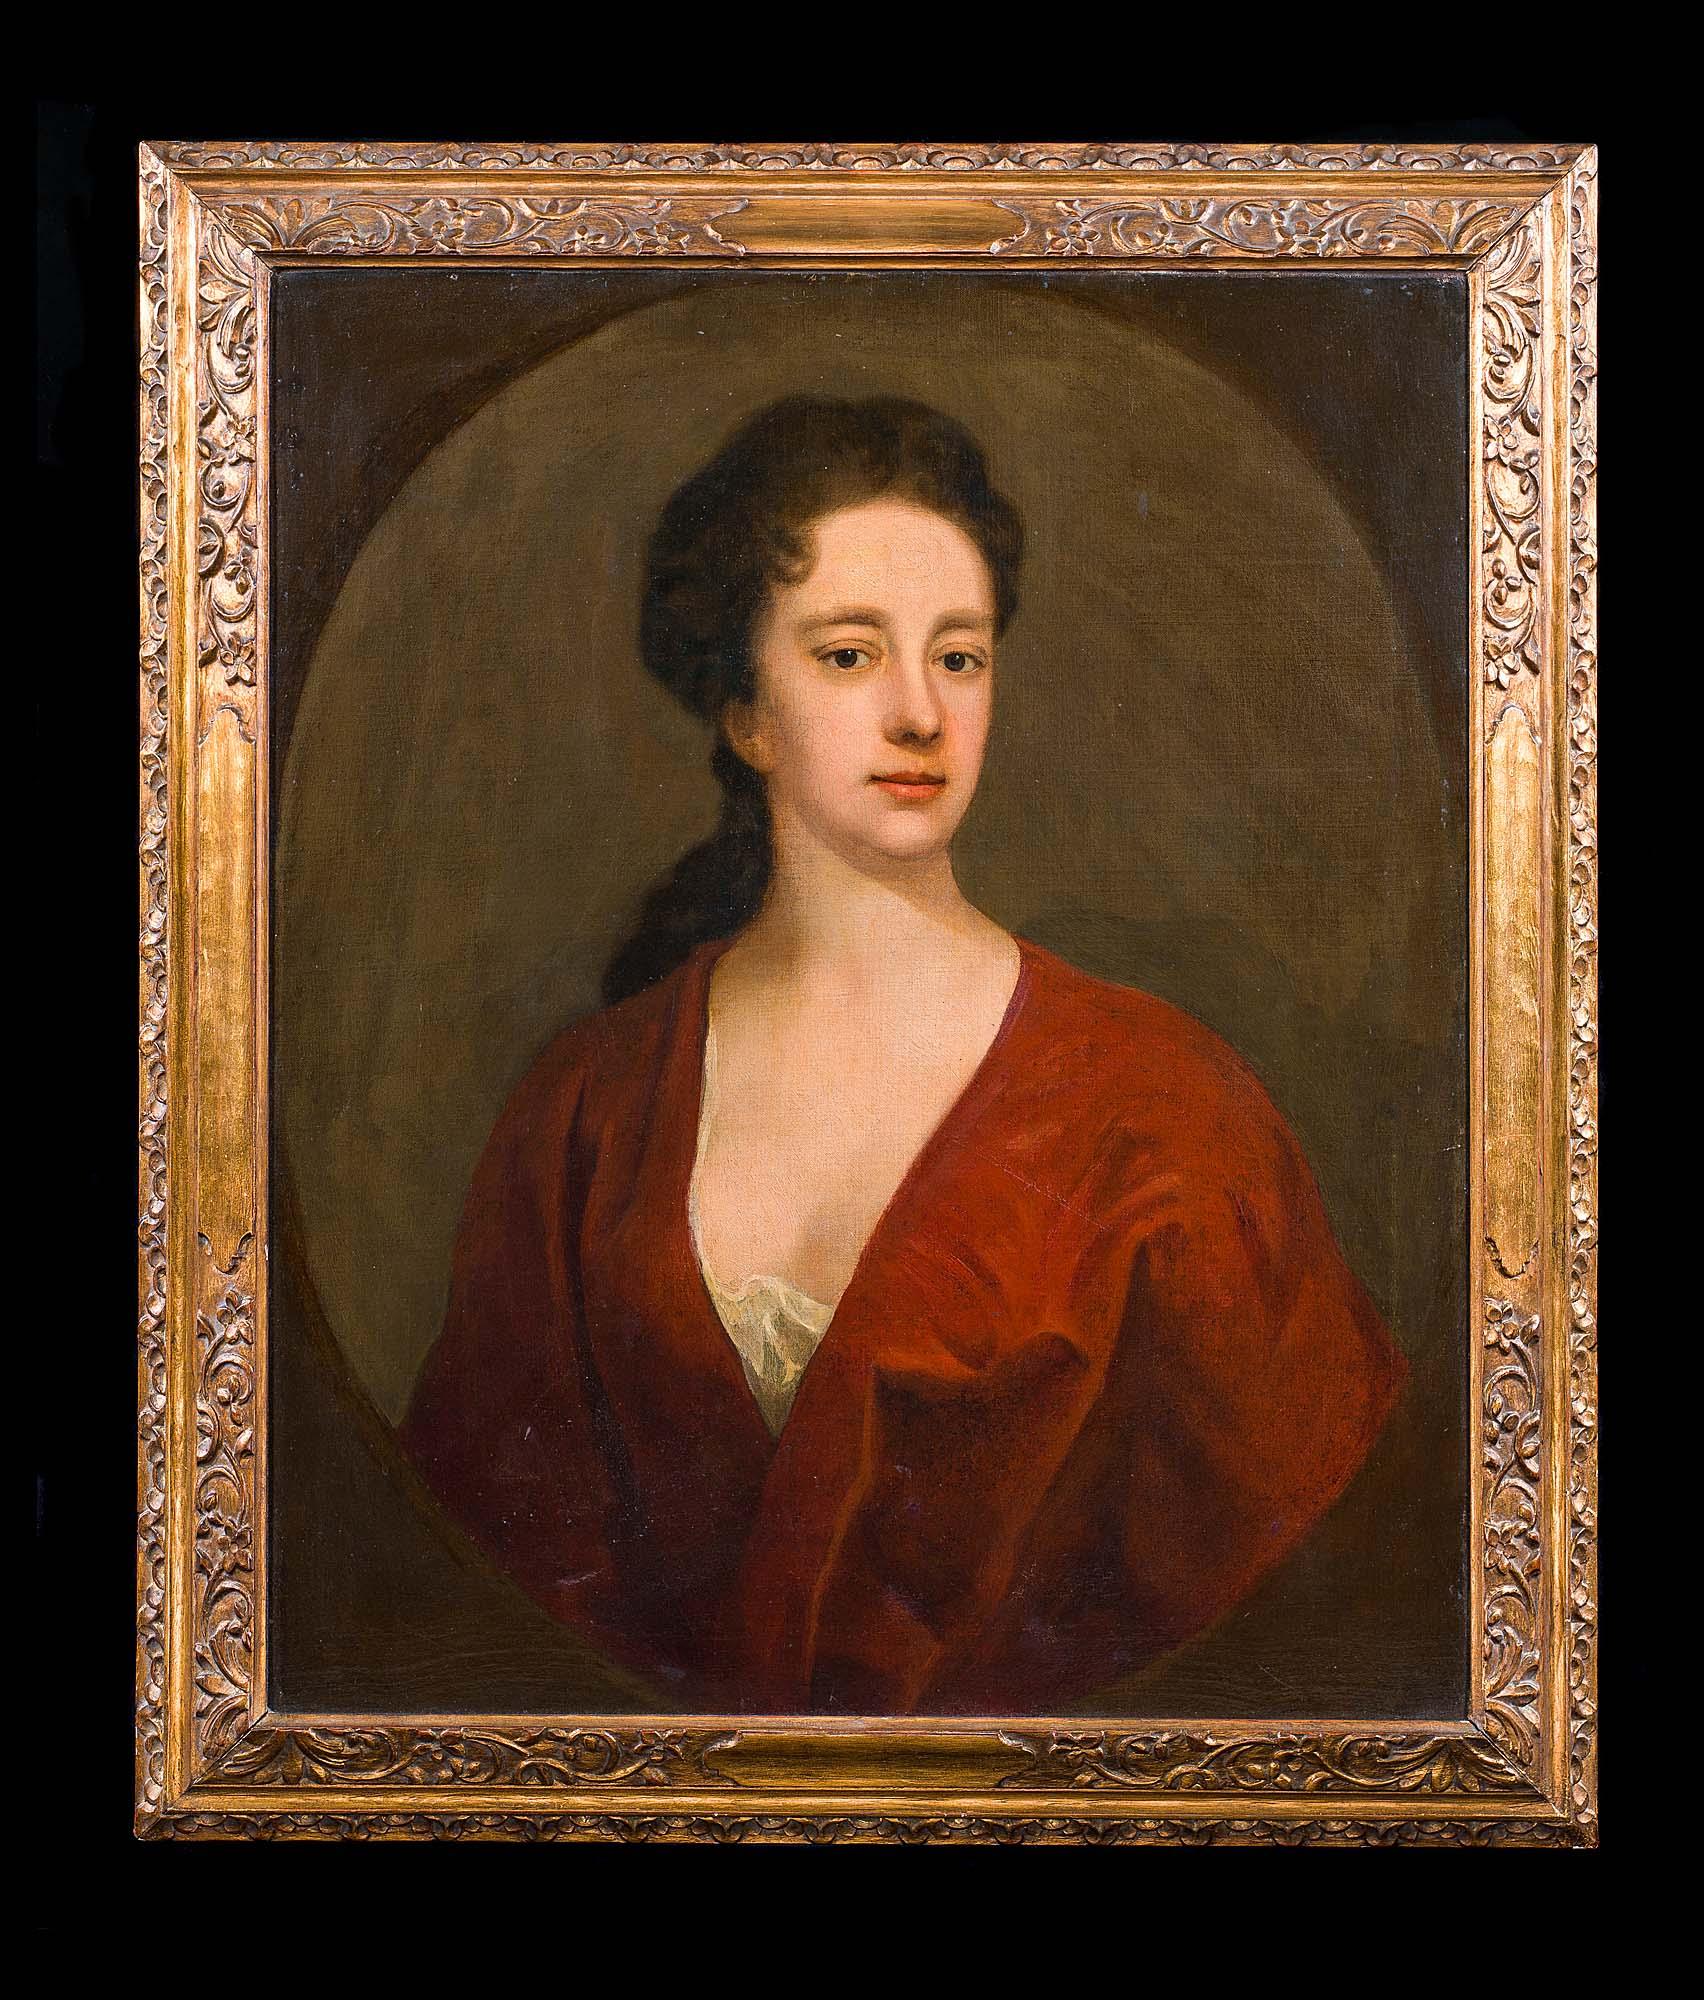 18th century lady portrait